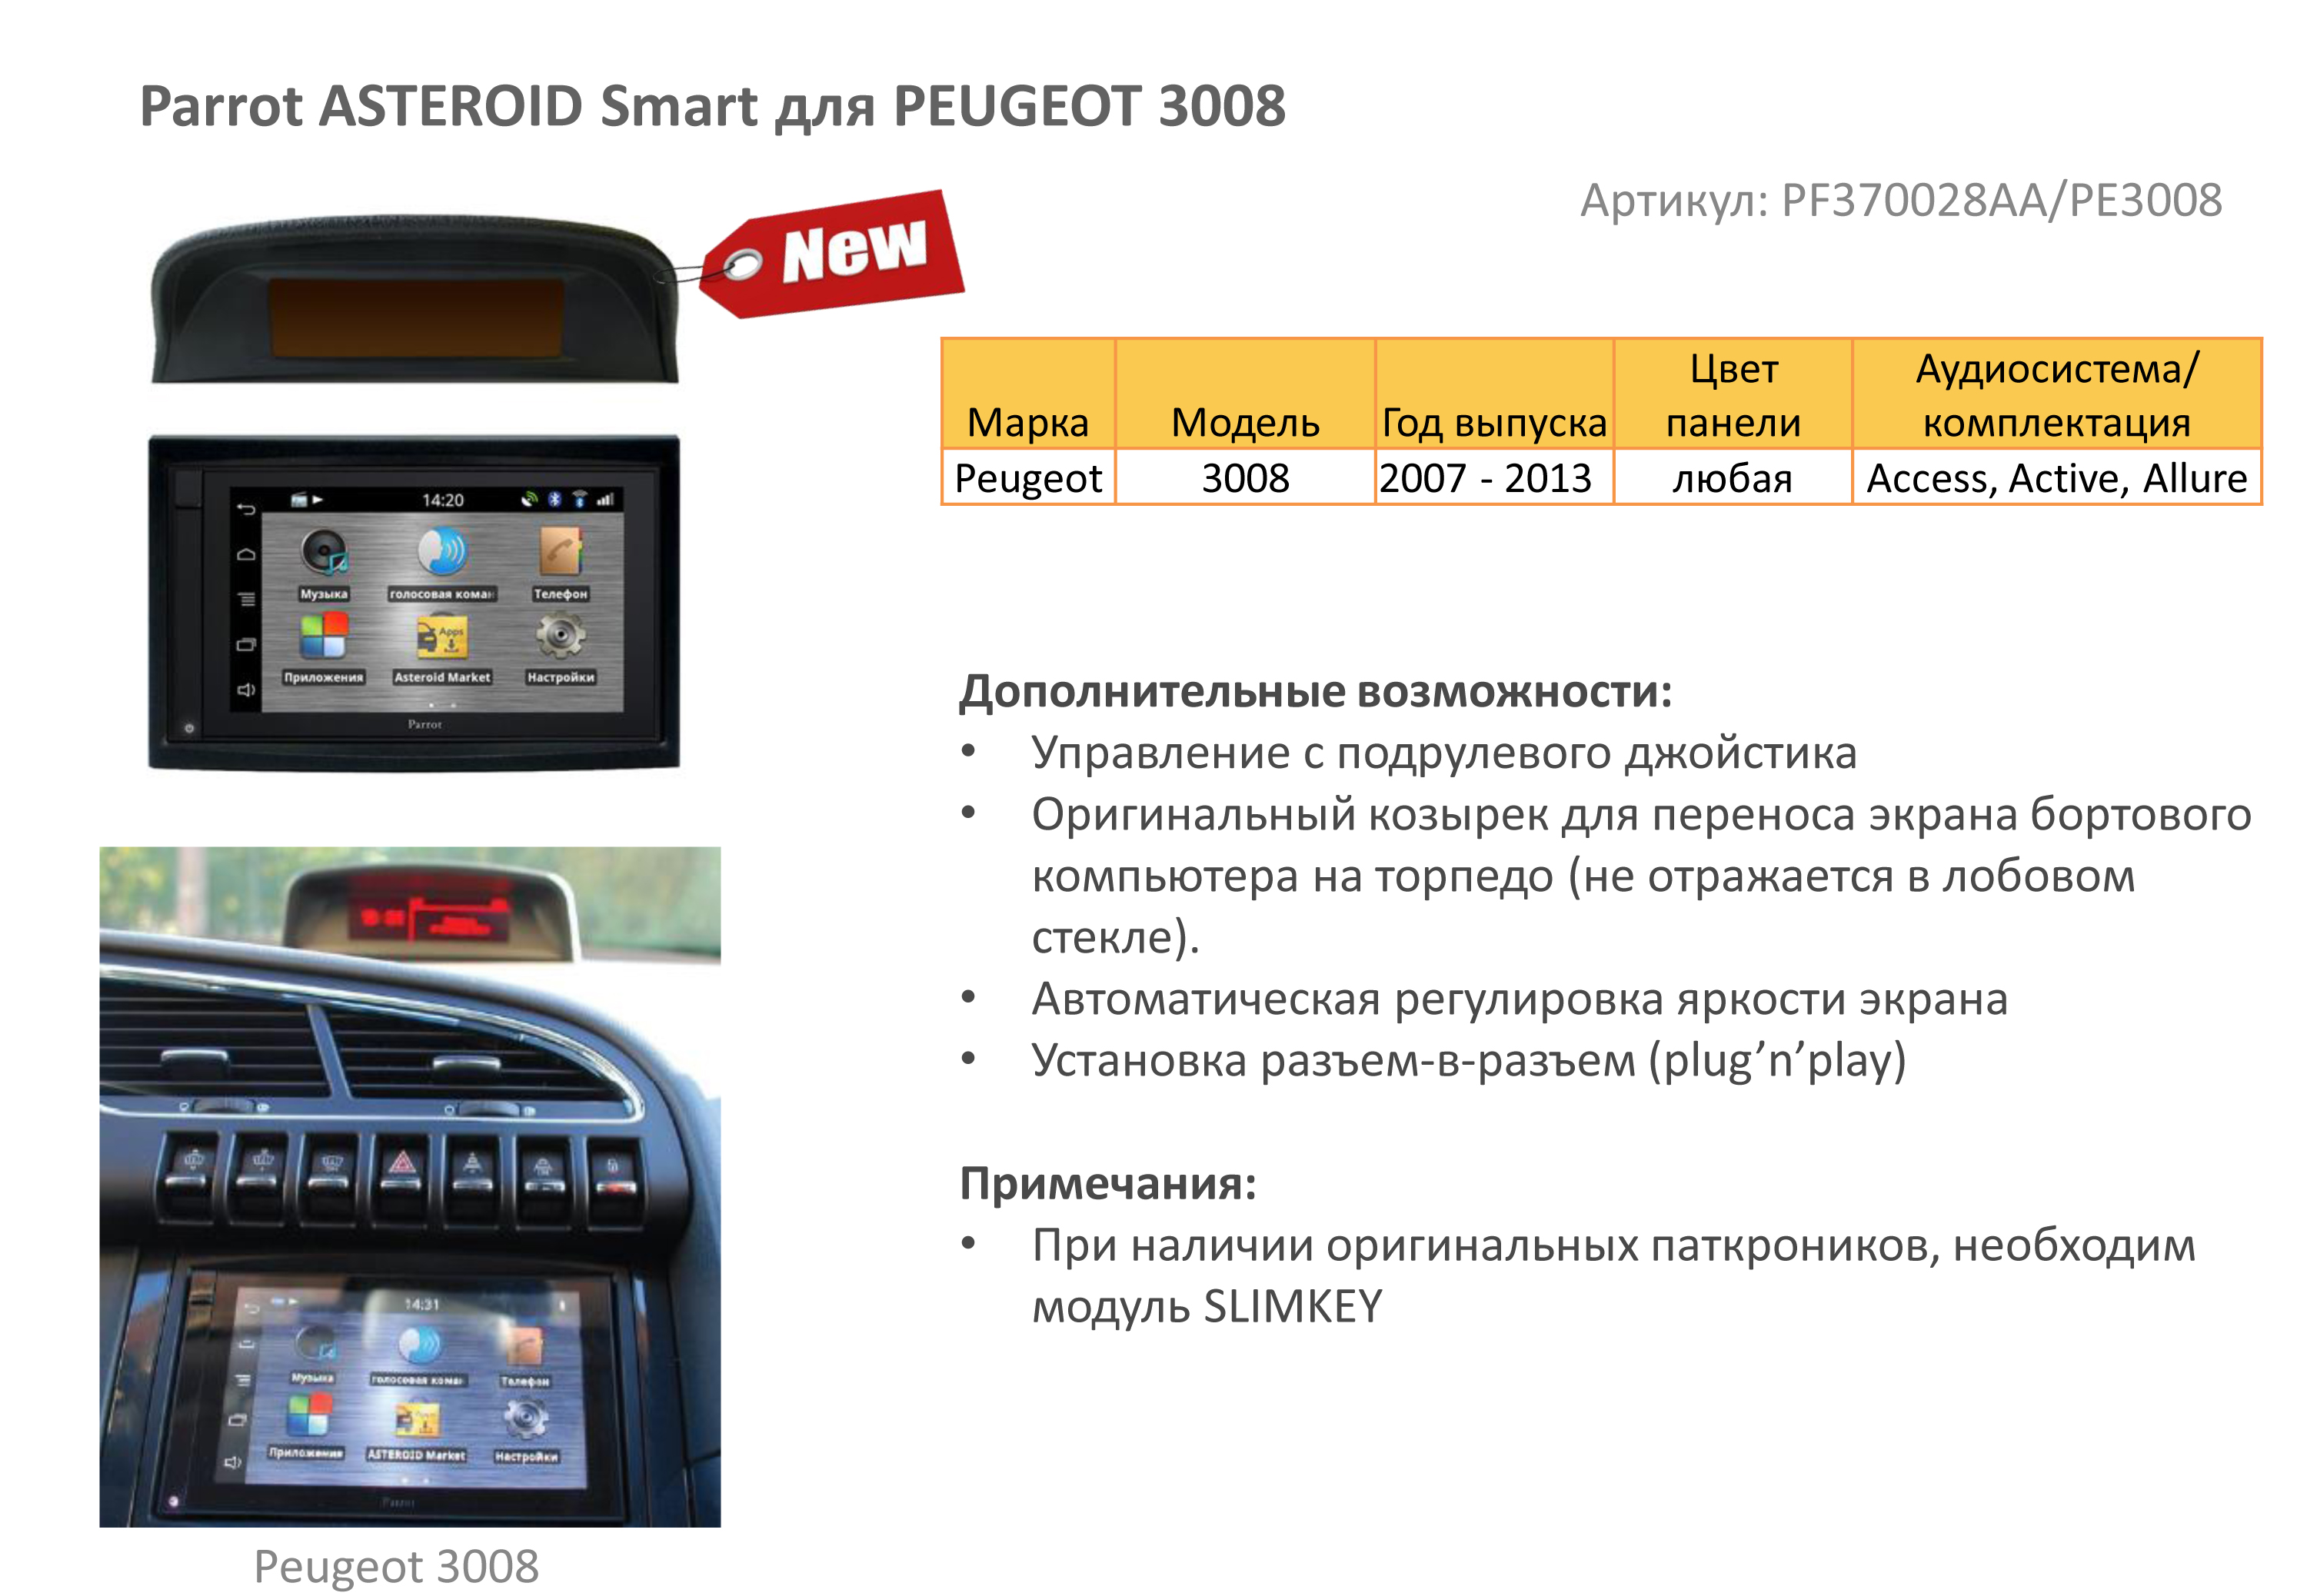 Parrot ASTEROID Smart для PEUGEOT 3008